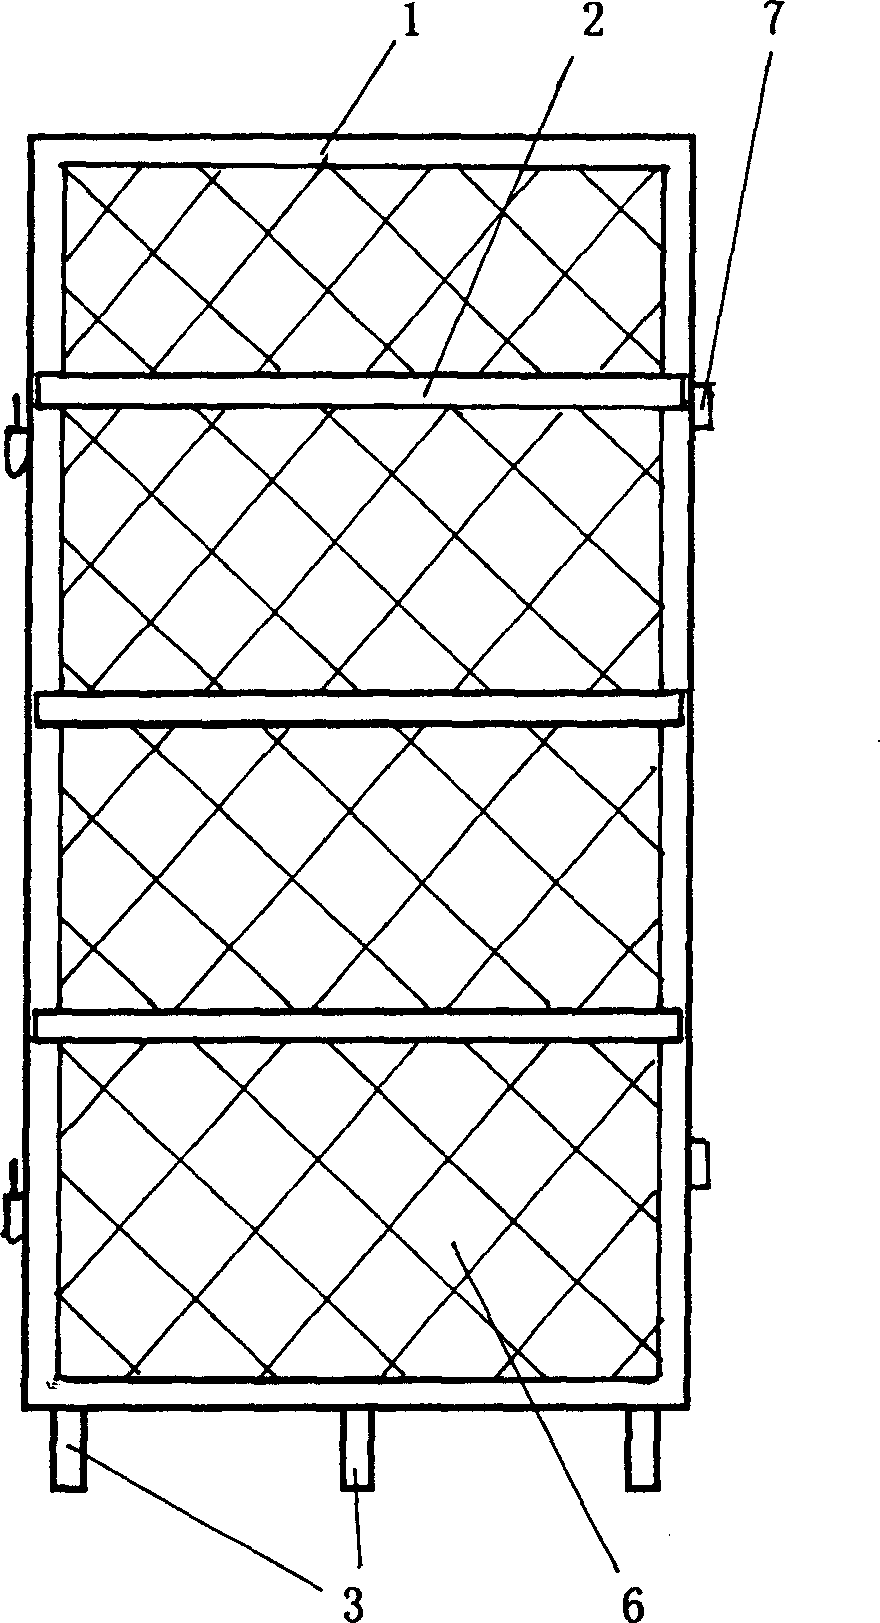 Multifunctional grid for blocking dirt